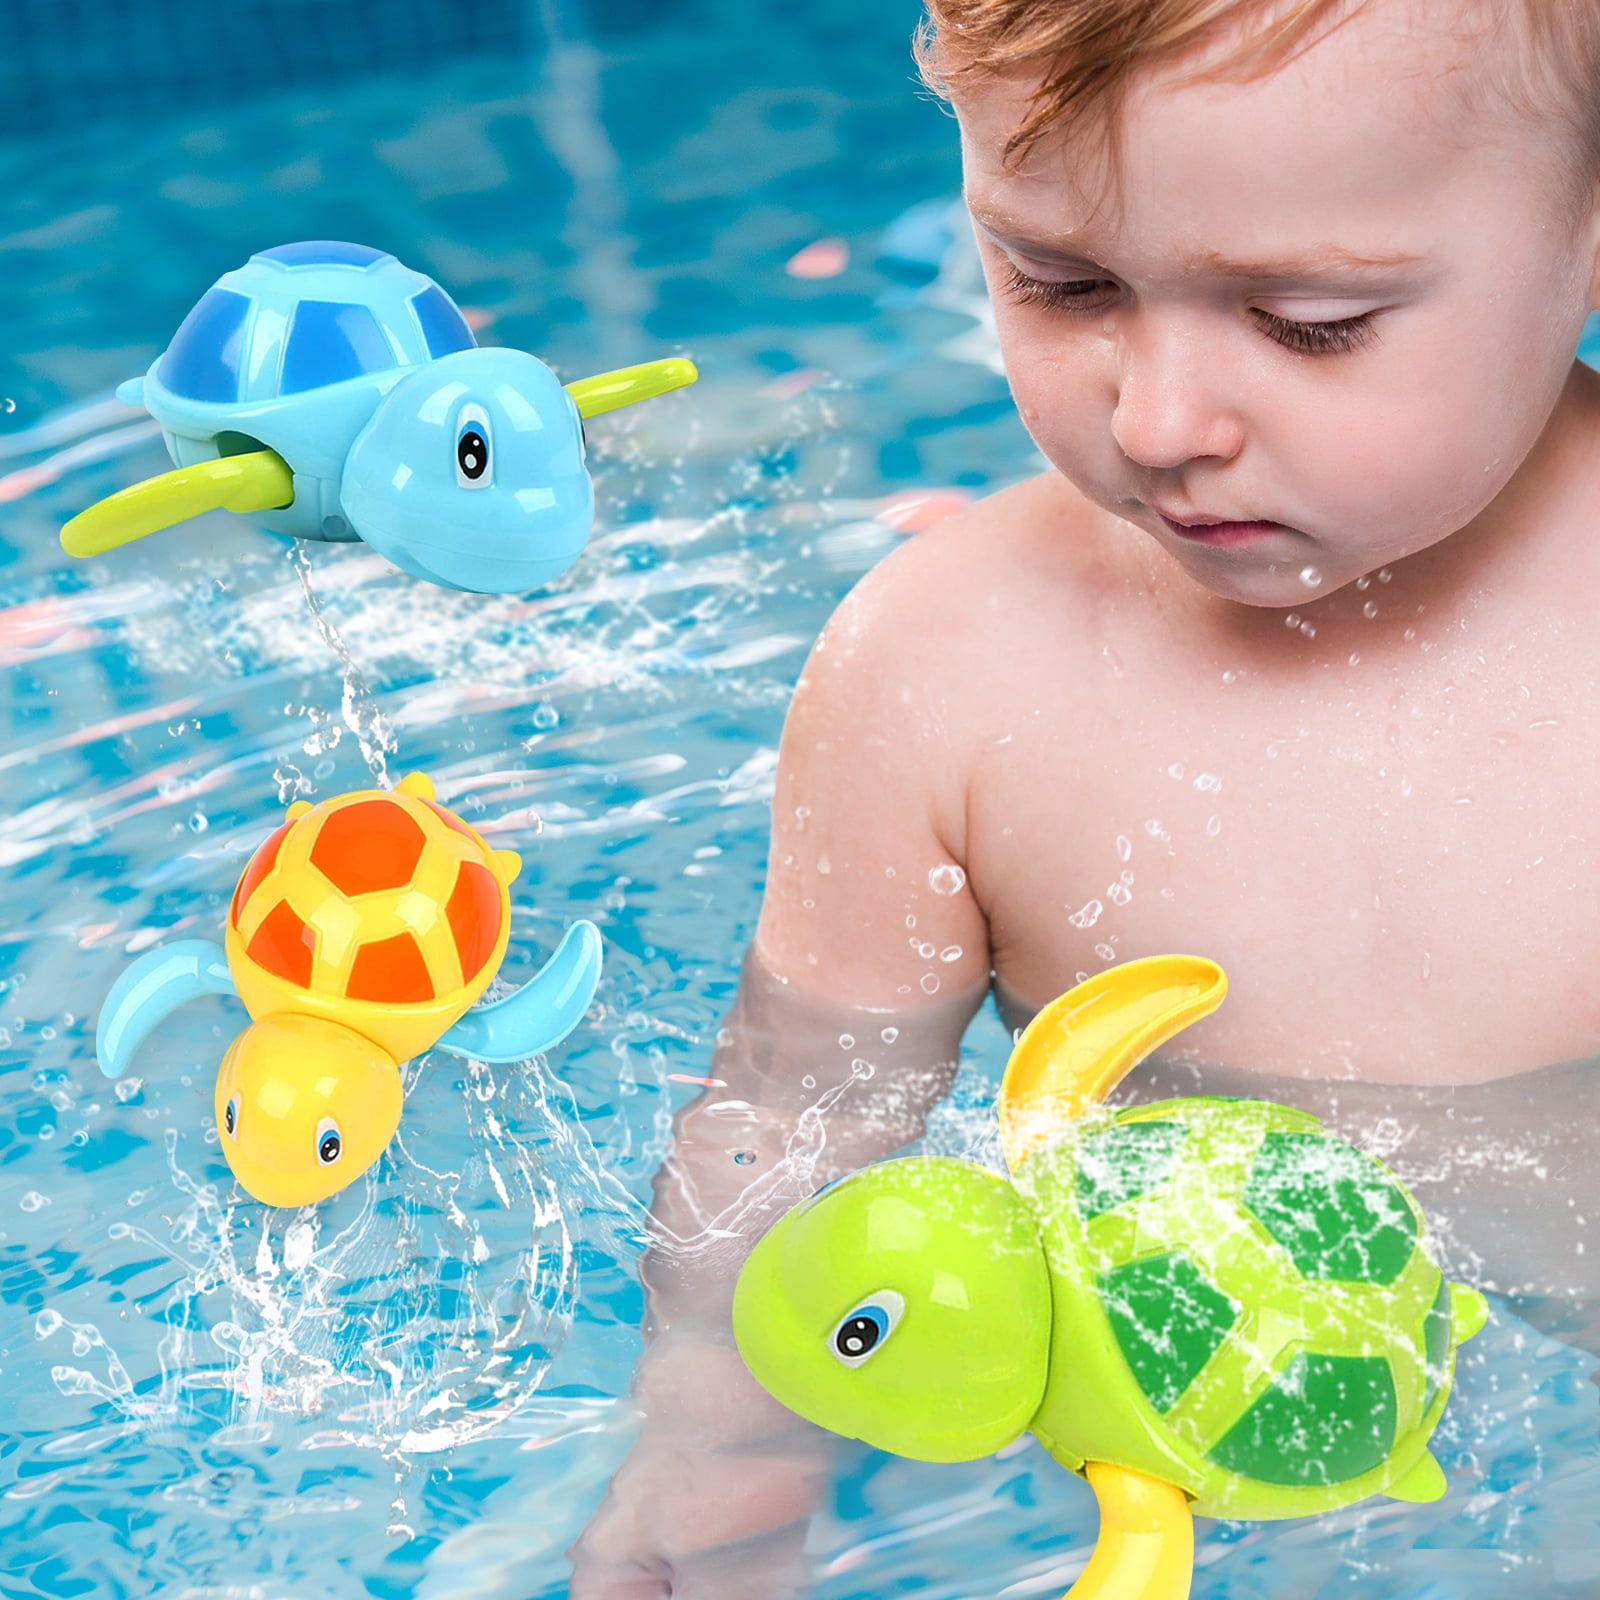 iyeam baby bath toys for toddlers 1-3, 6pcs dinosaur bath toys no hole bathtub  toys for kids ages 4-8